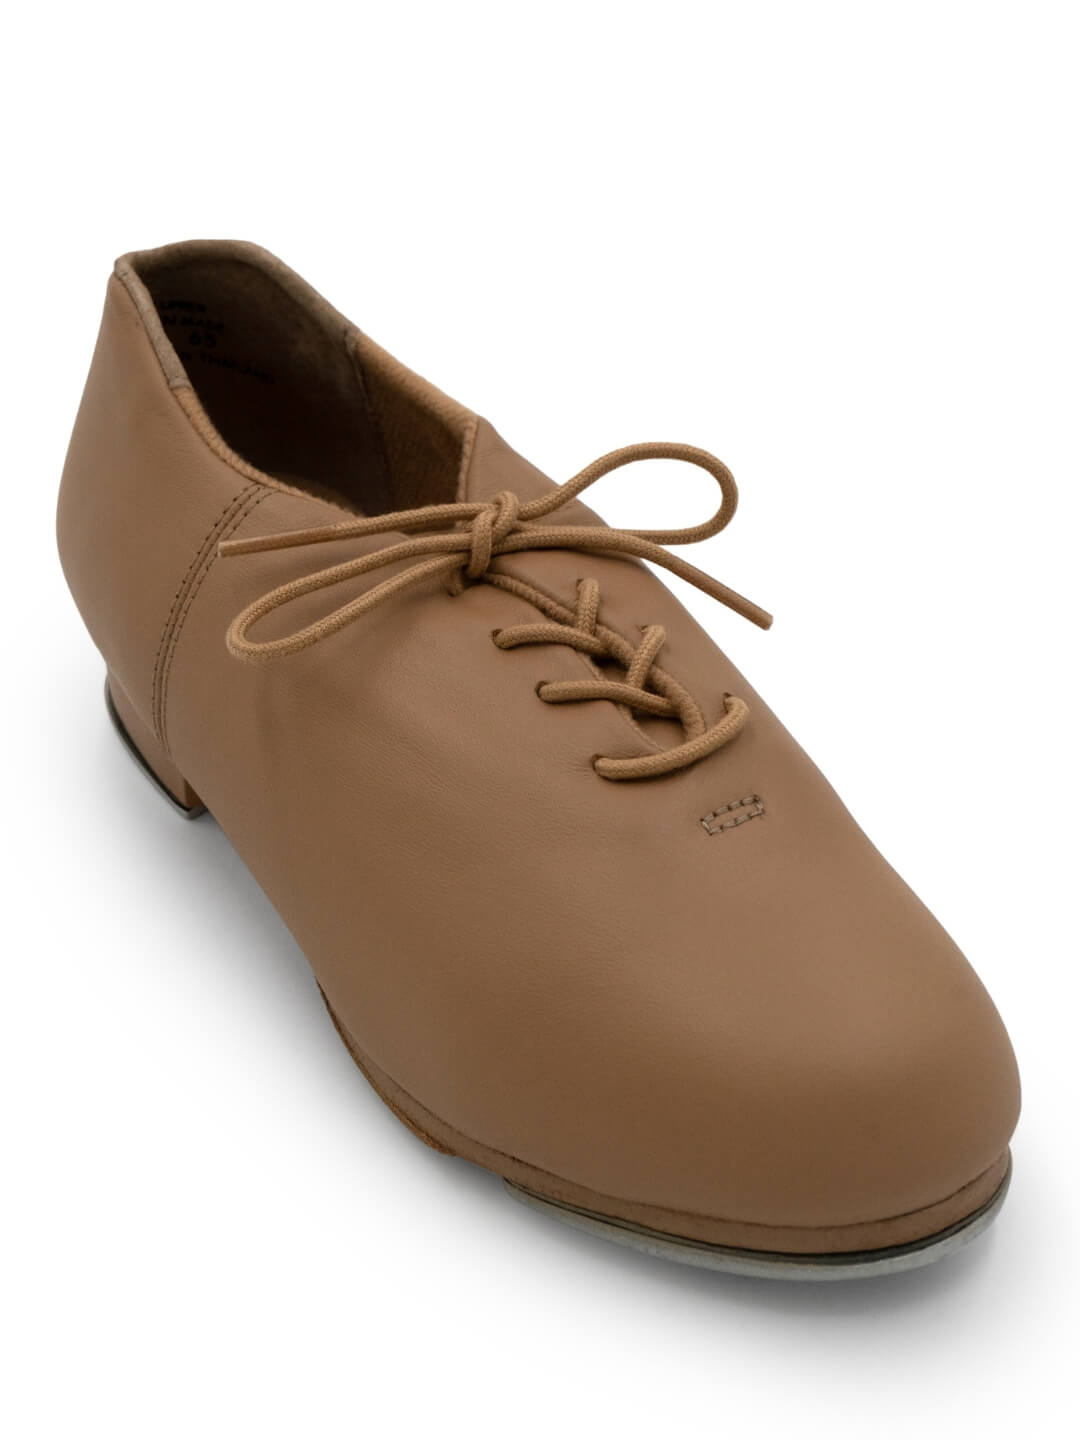 Student Footlight Character Shoe with Non-Slip Heel | Capezio®